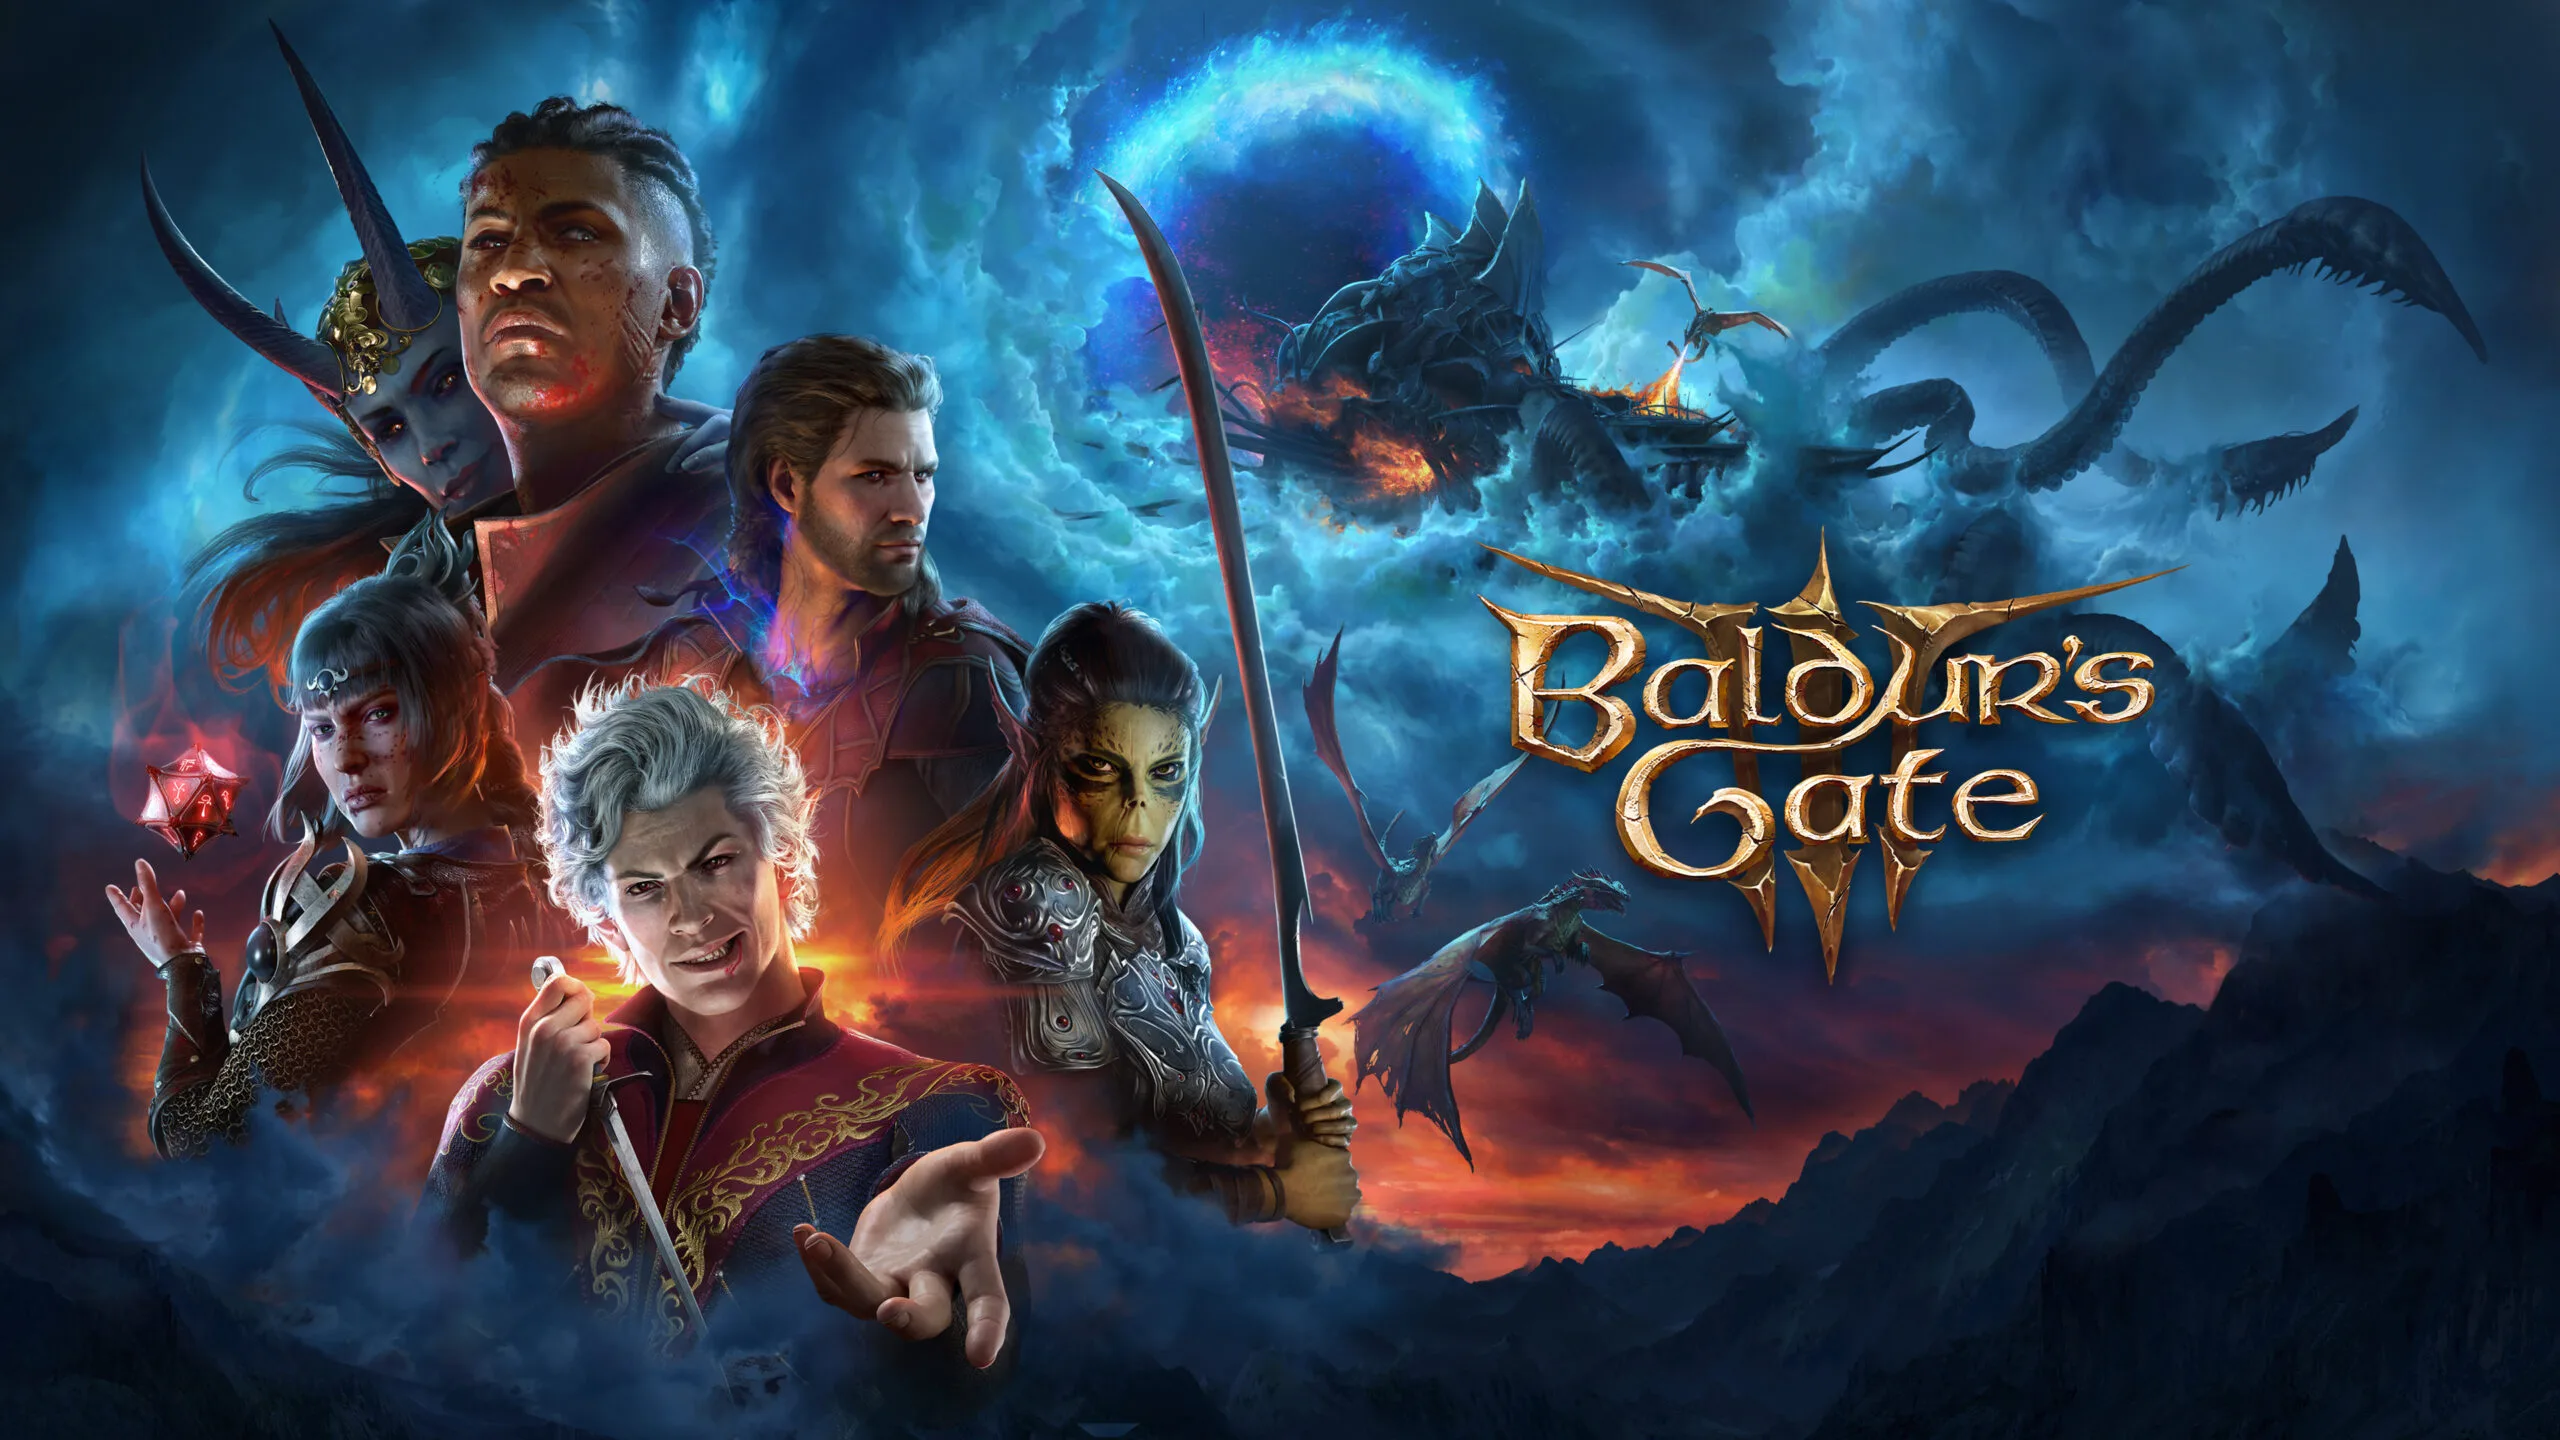 Challenges and Shortcomings of Baldur's Gate III